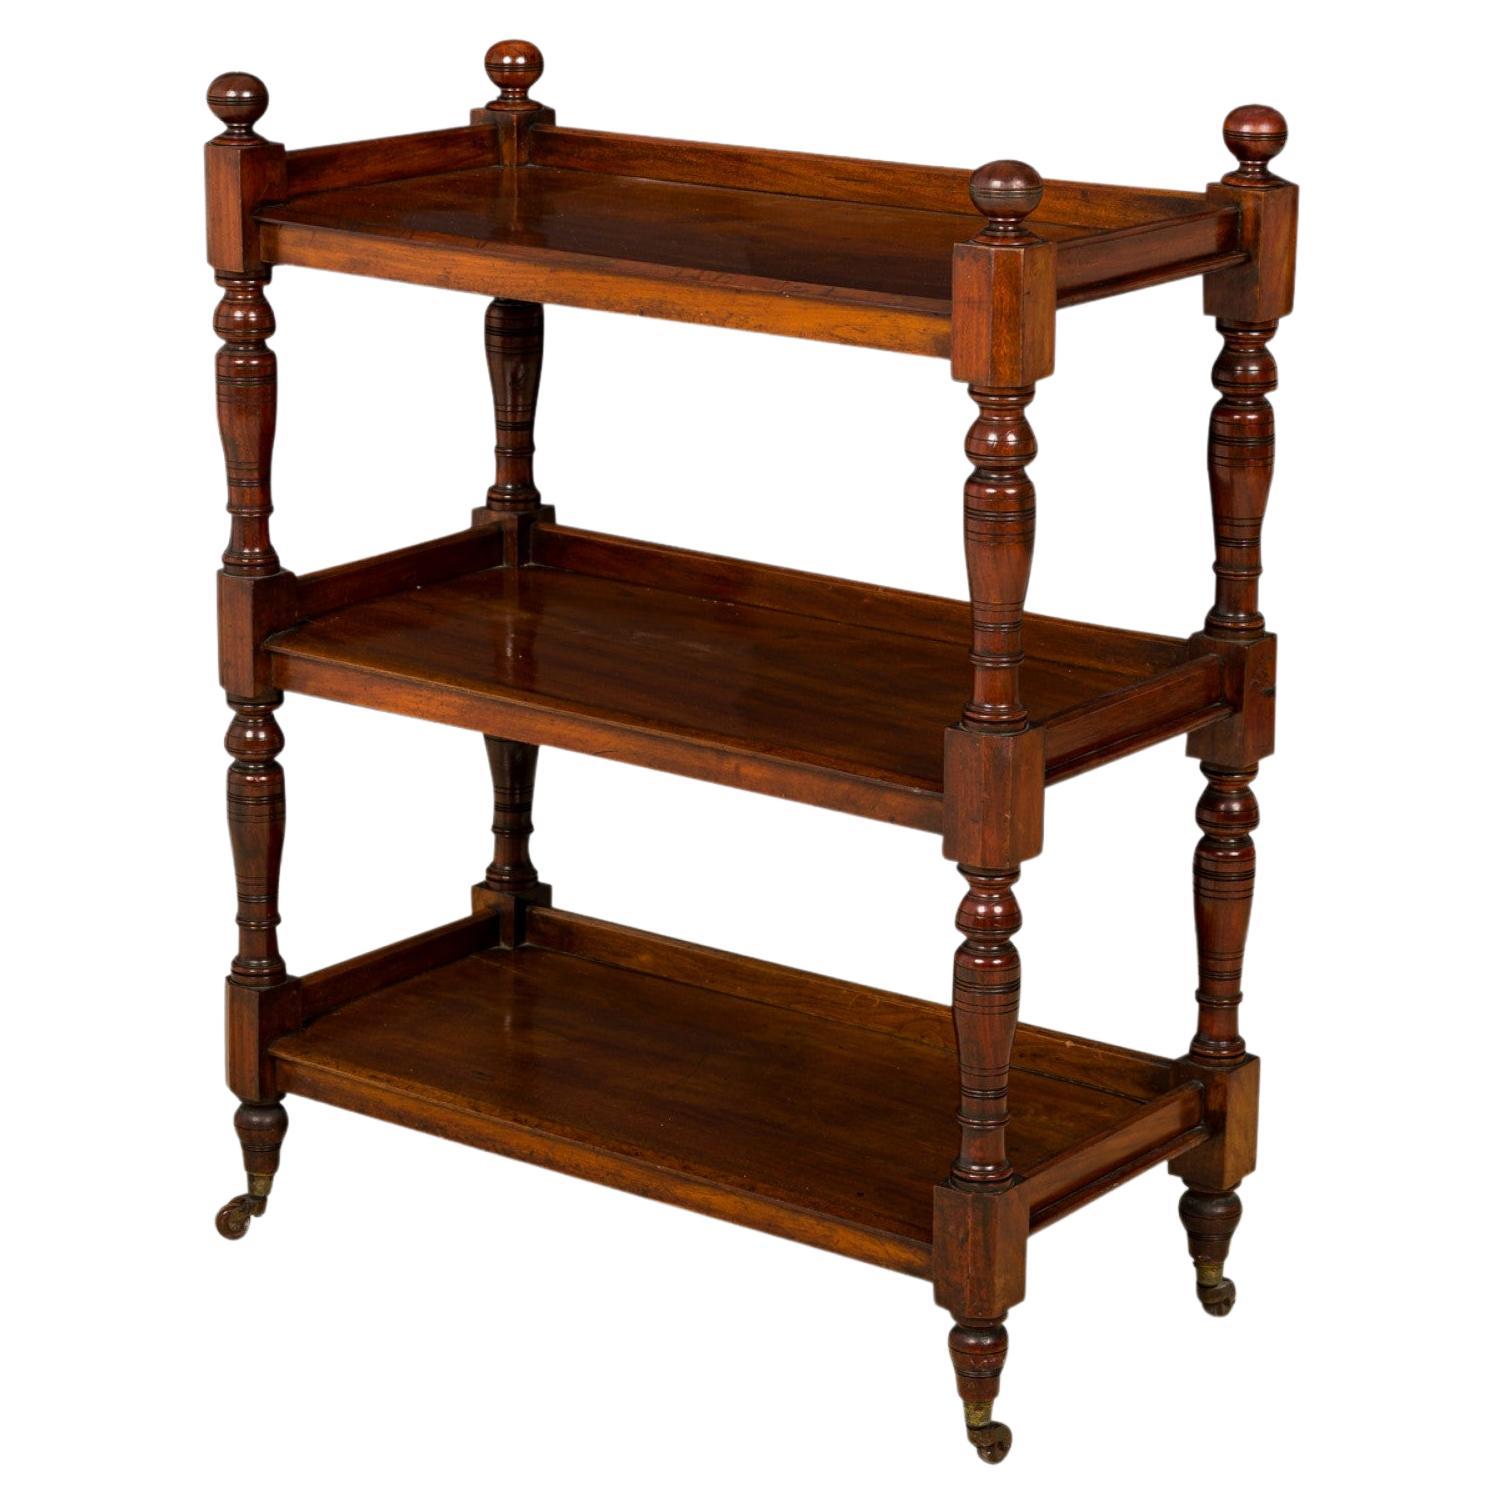 English Victorian Turned Leg Three Shelf Small Wooden Etagere / Display Shelf For Sale